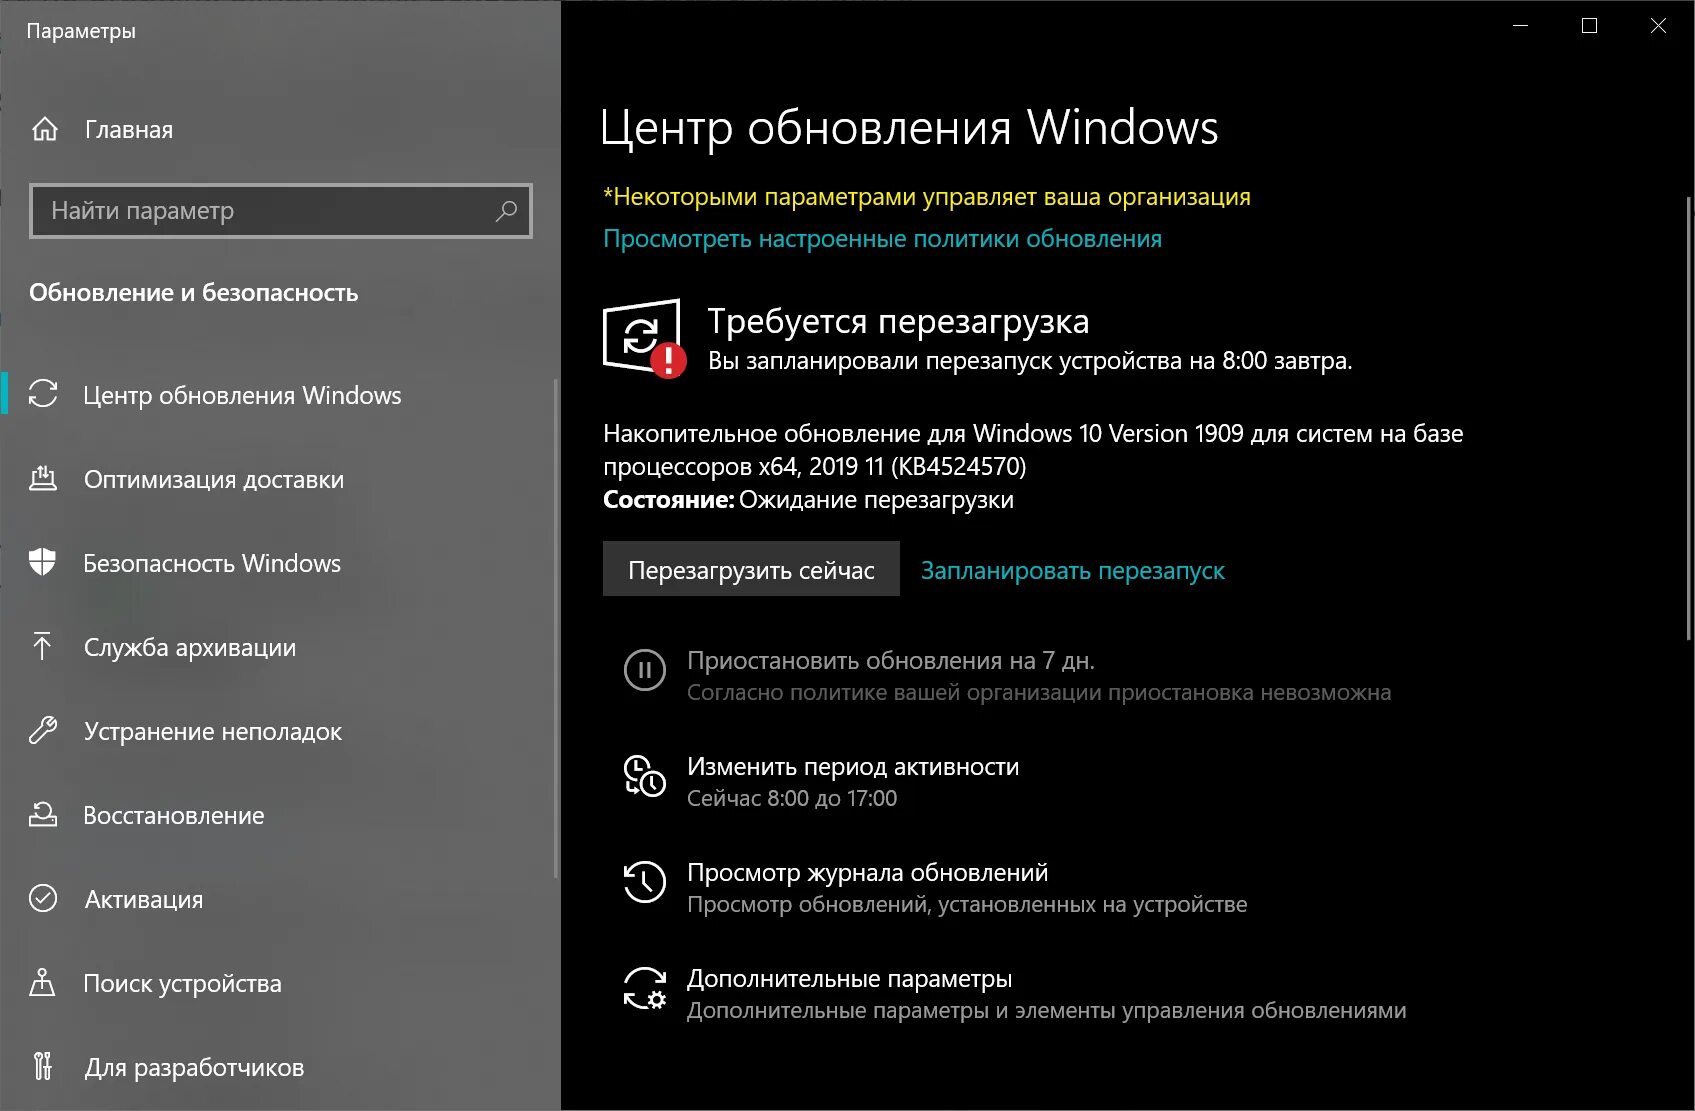 Windows 11 2023 update. Параметры обновления Windows 10. Параметрывинловс 10 обновление. Обновление виндовс 2016. Обновление и безопасность Windows 10.